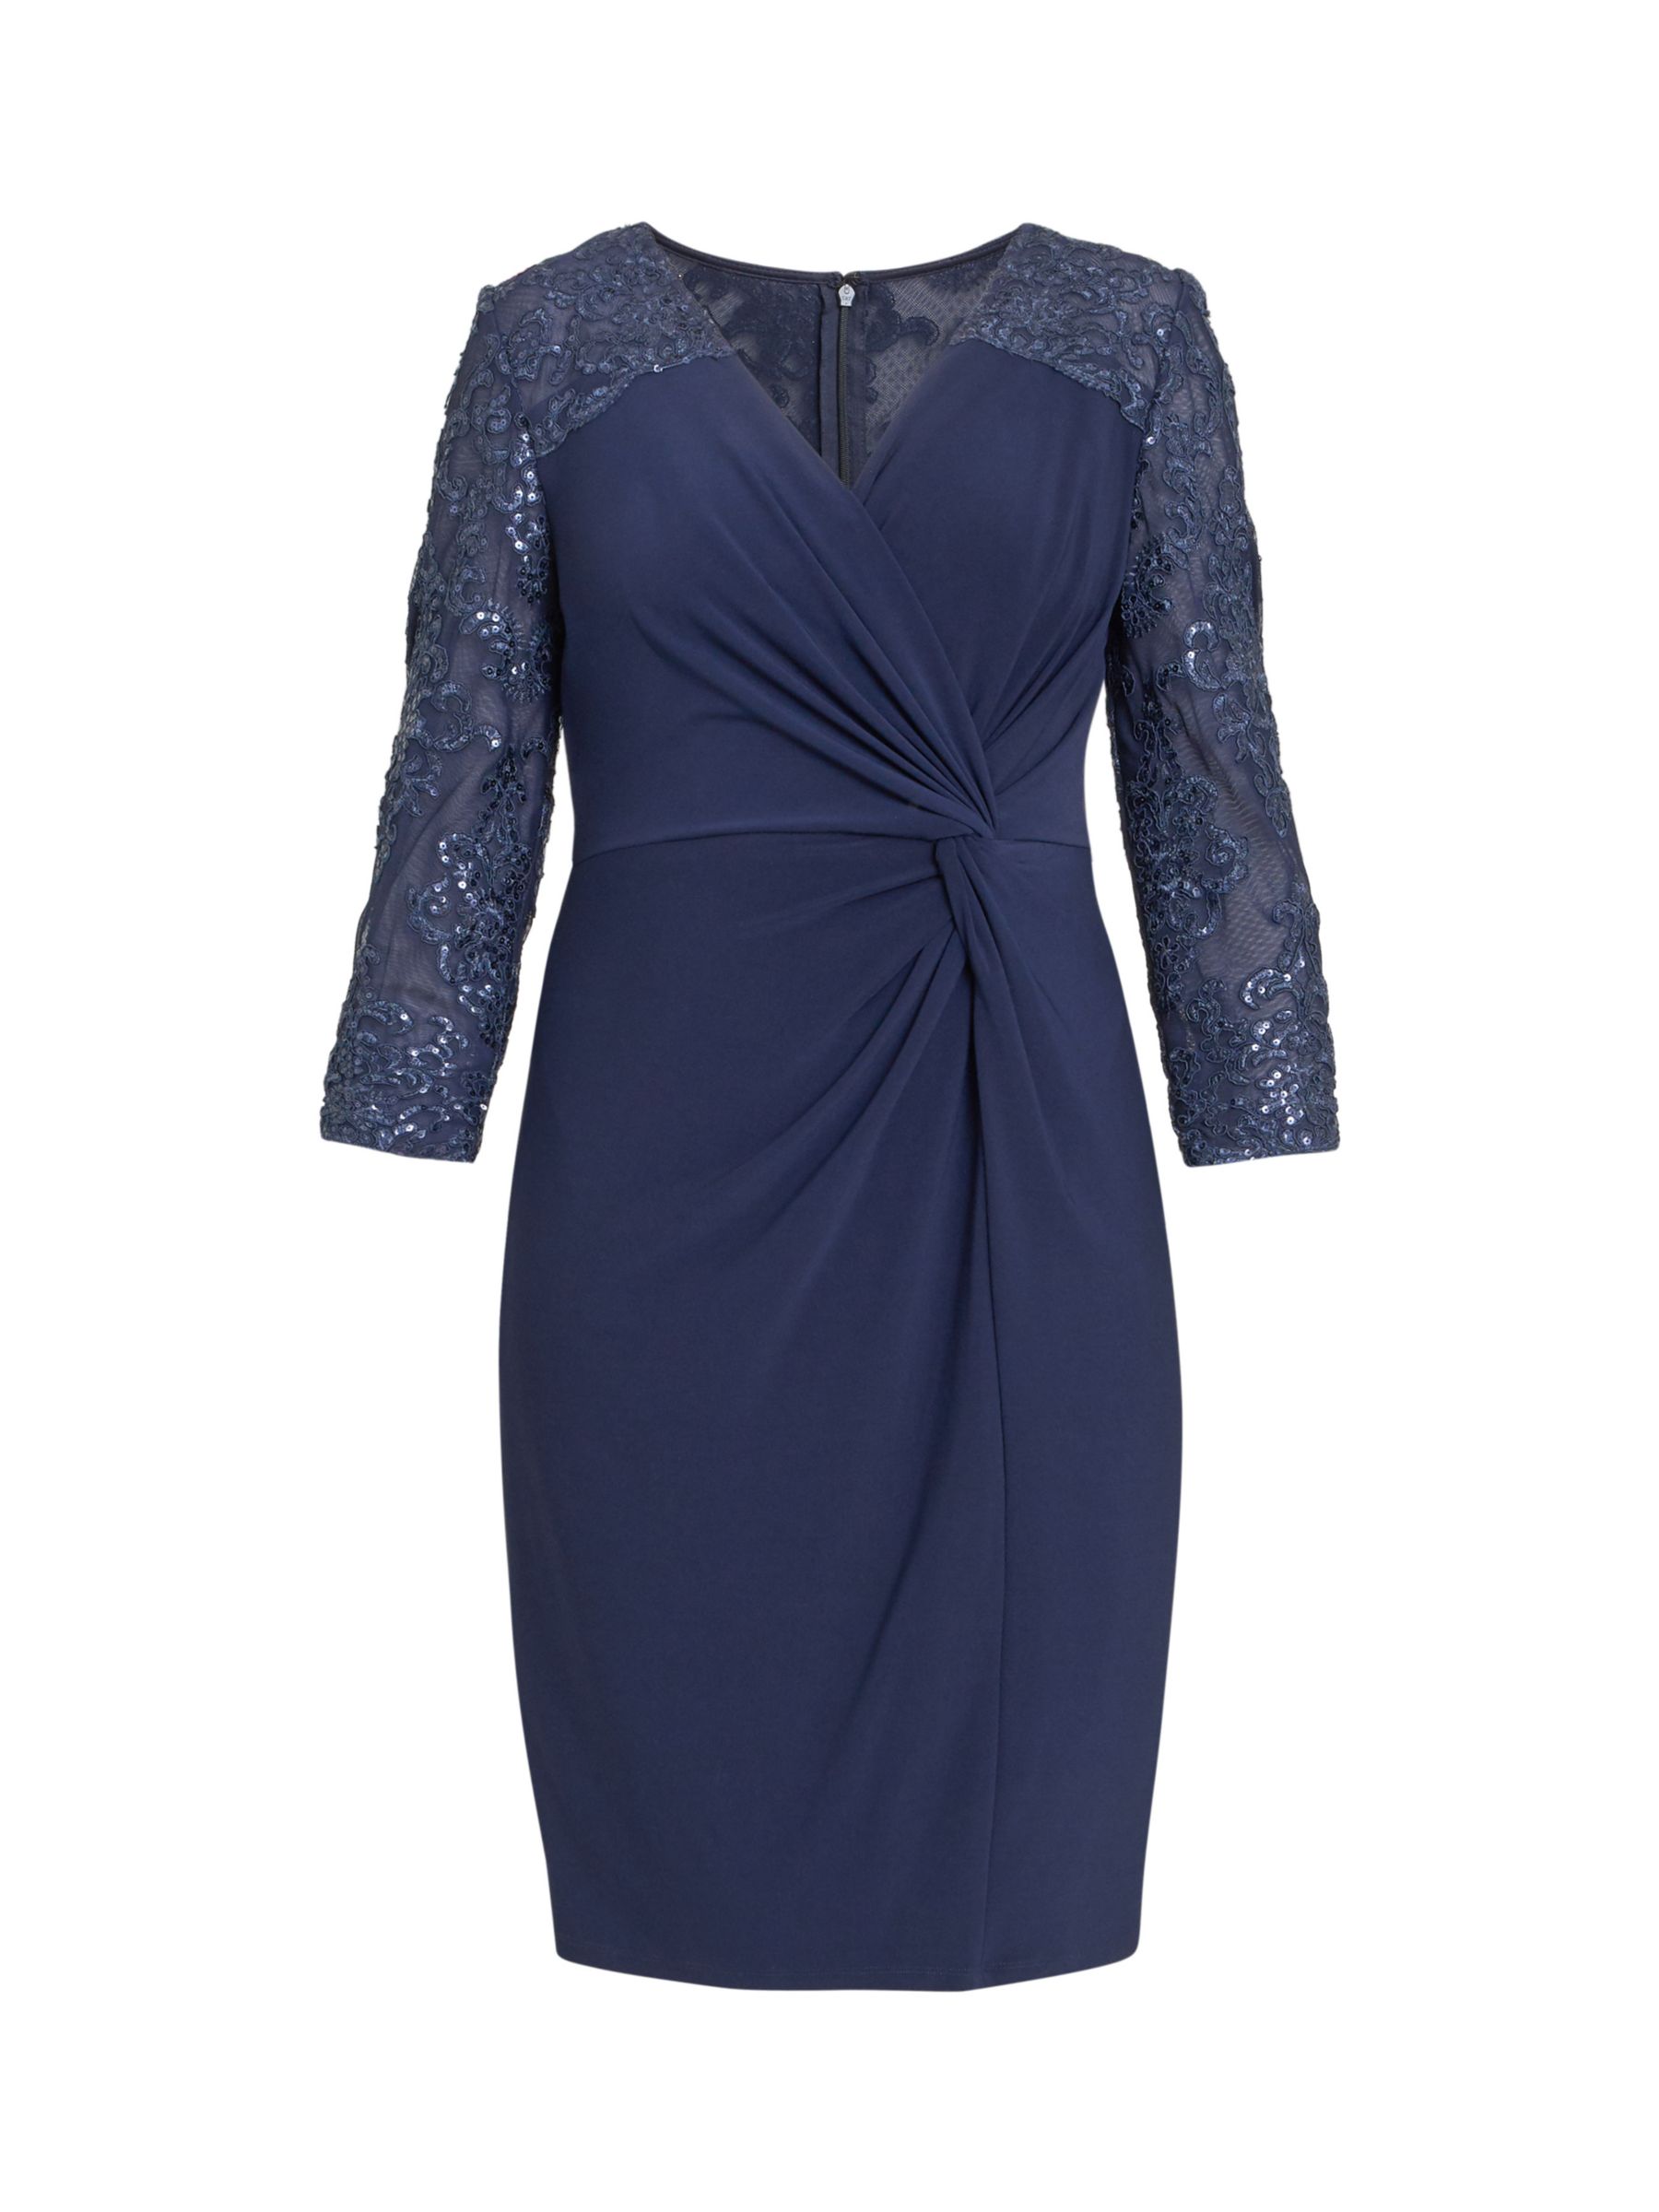 Buy Gina Bacconi Alberta Sheath Dress, Navy Online at johnlewis.com